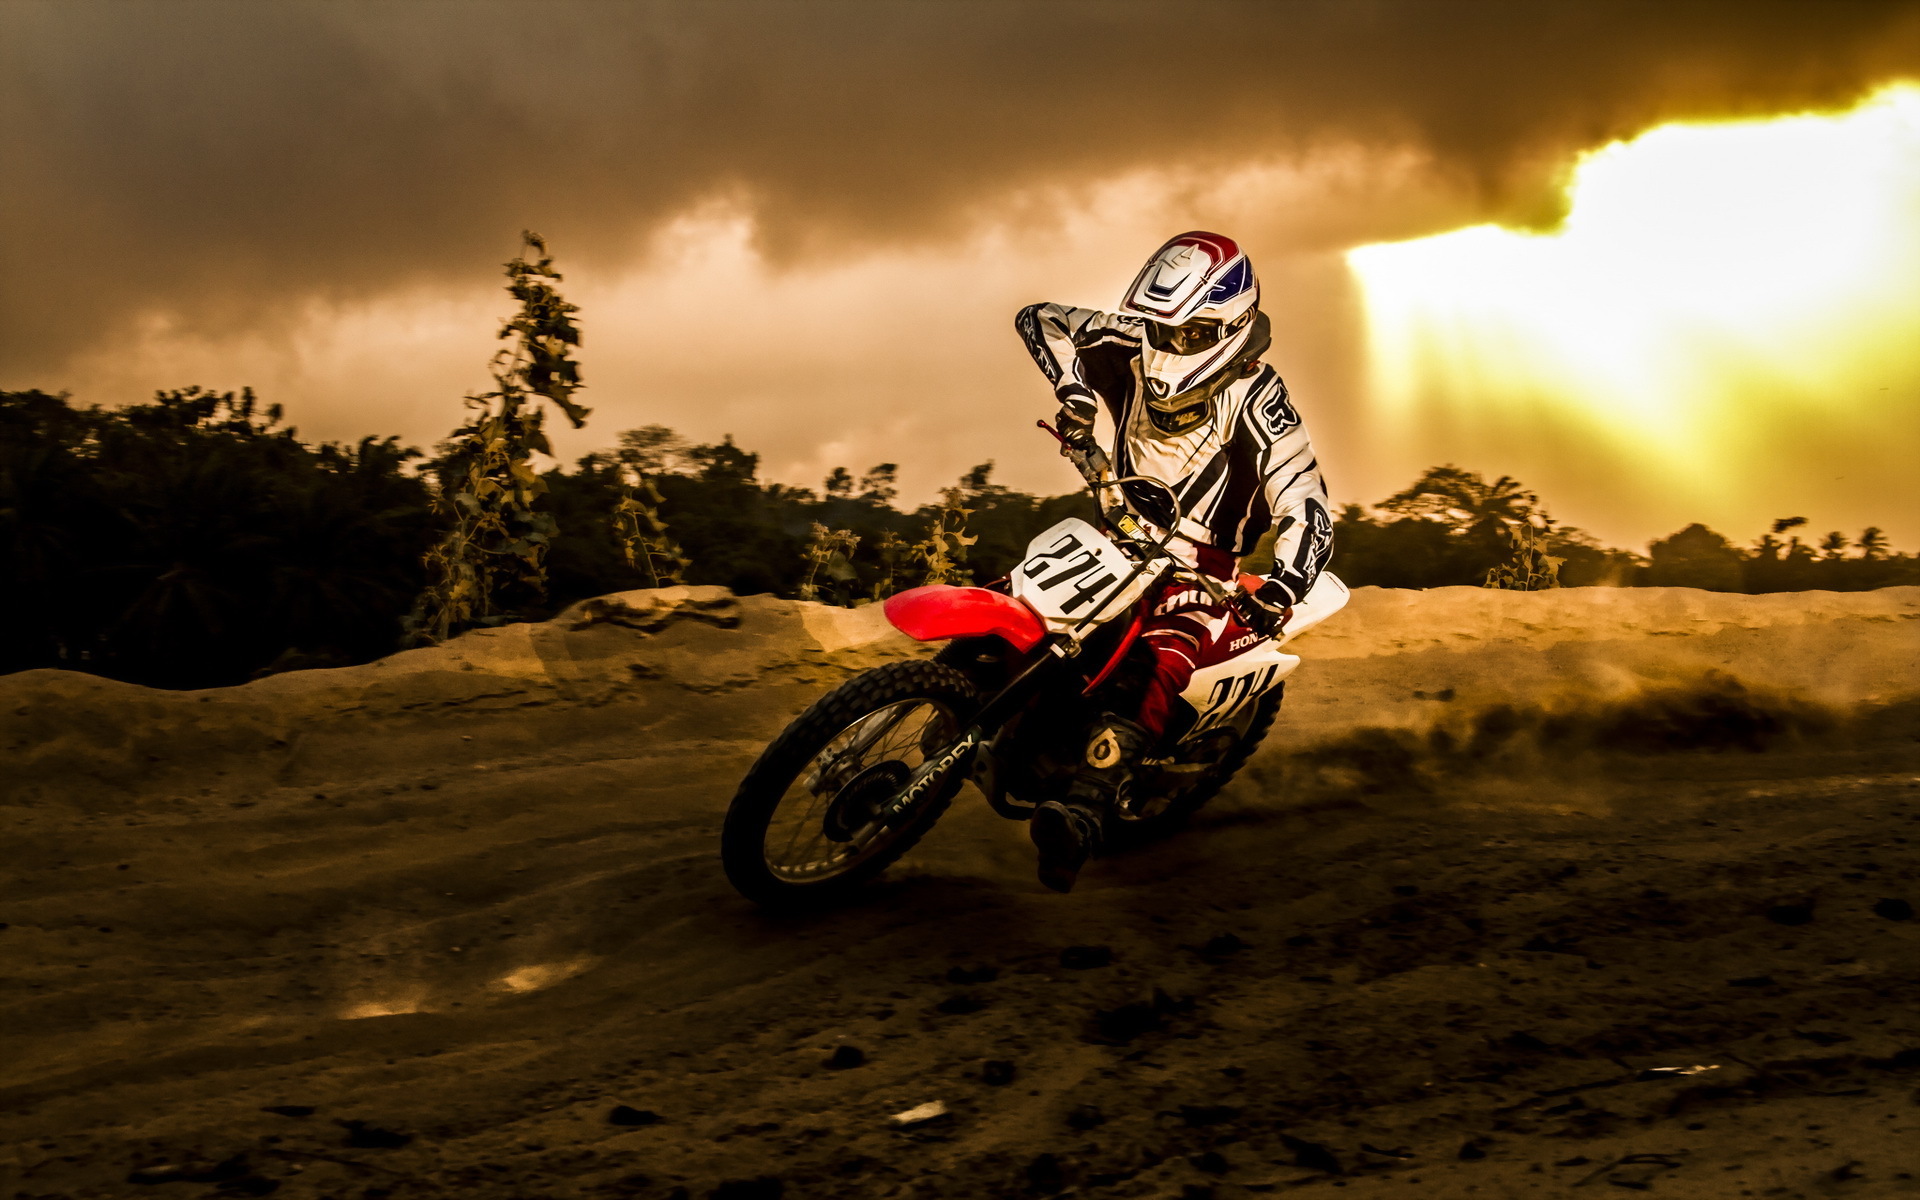 Sunset Bike Racing - Motocross download the last version for windows